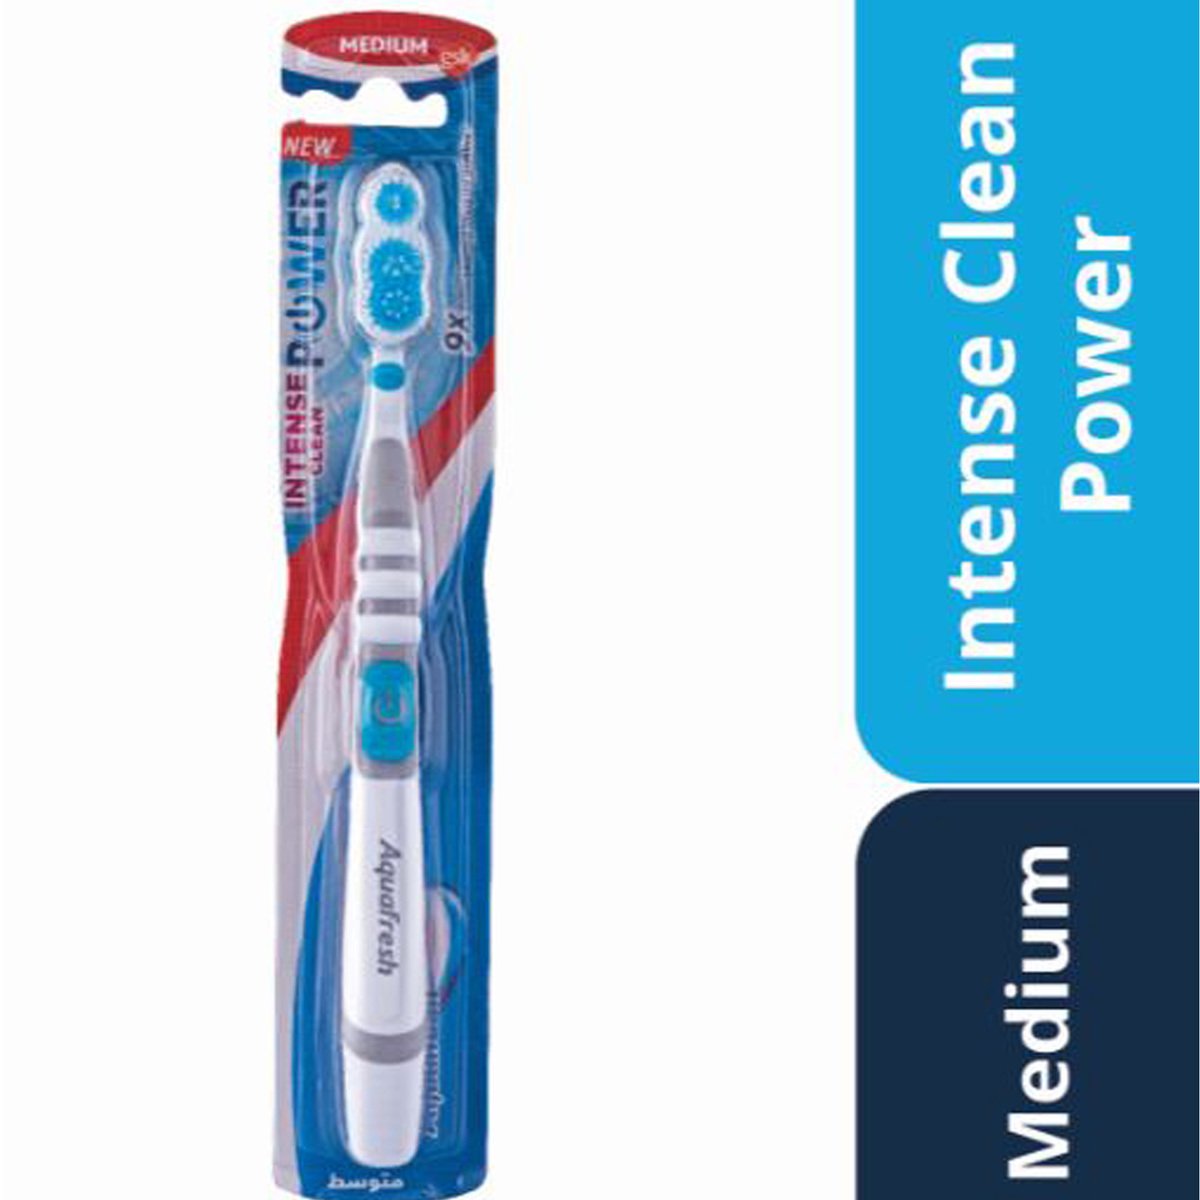 Aquafresh Intense Clean Power Toothbrush Medium Assorted Color 1 pc